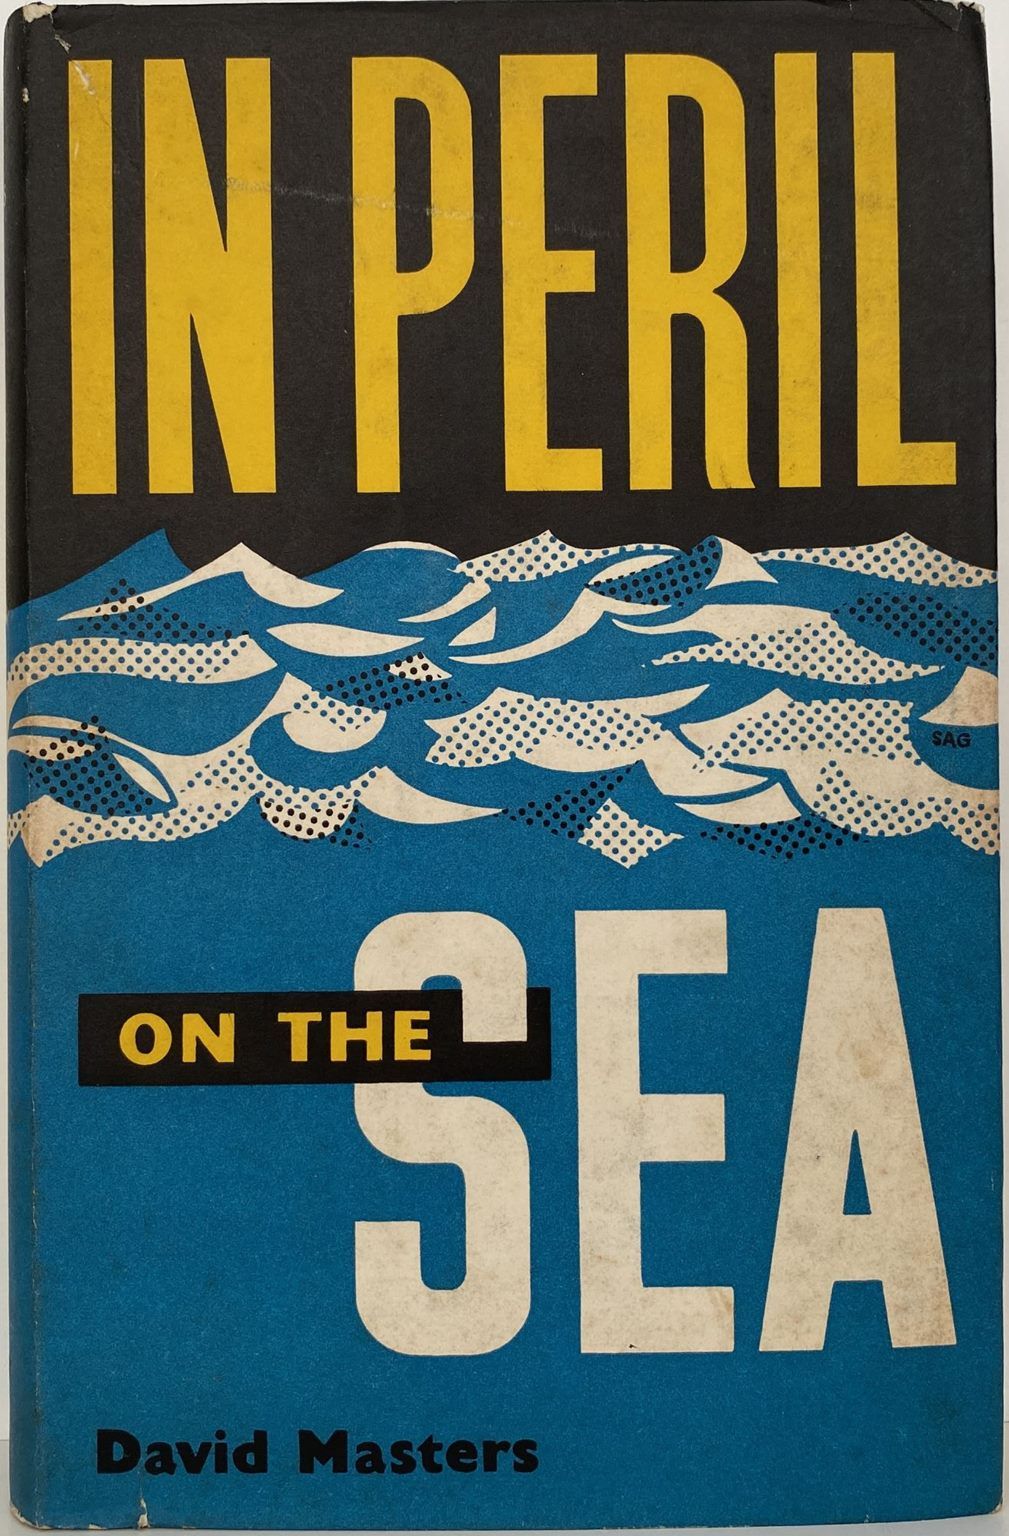 IN PERIL ON THE SEA: War Exploits of Allied Seamen